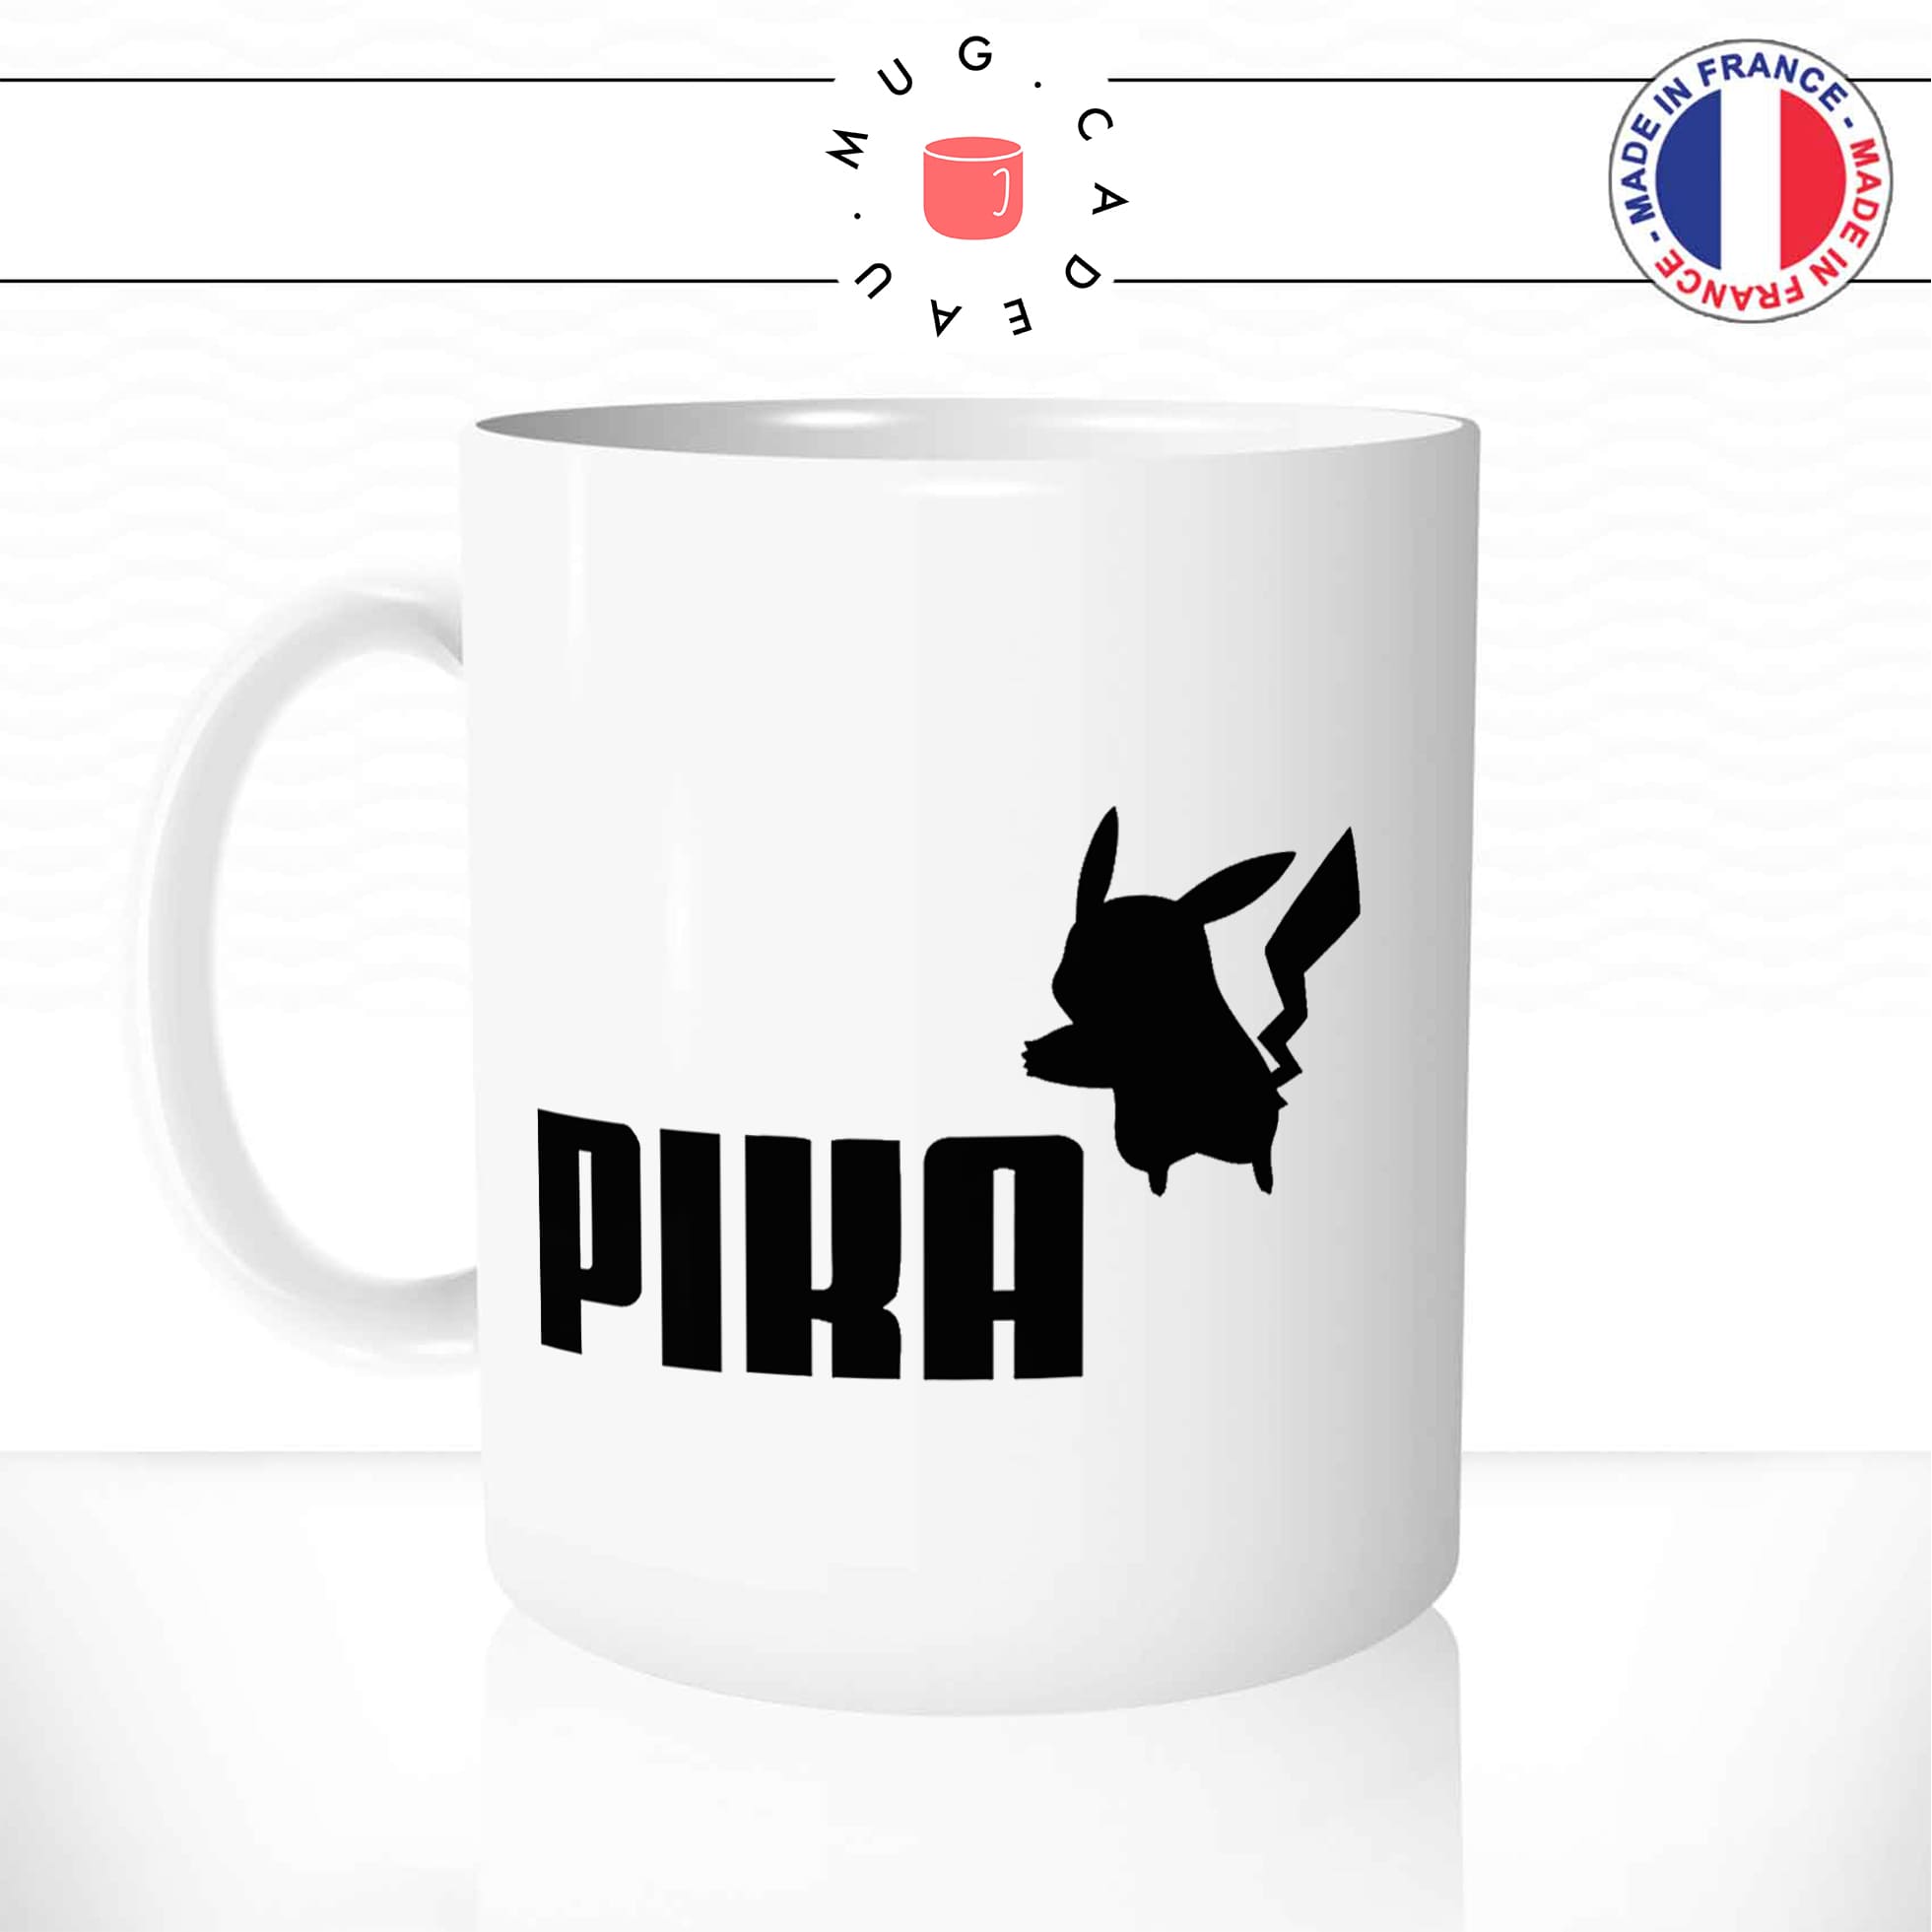 mug-tasse-blanc-unique-pika-puma-marque-animal-homme-femme-parodie-humour-fun-cool-idée-cadeau-original-personnalisé